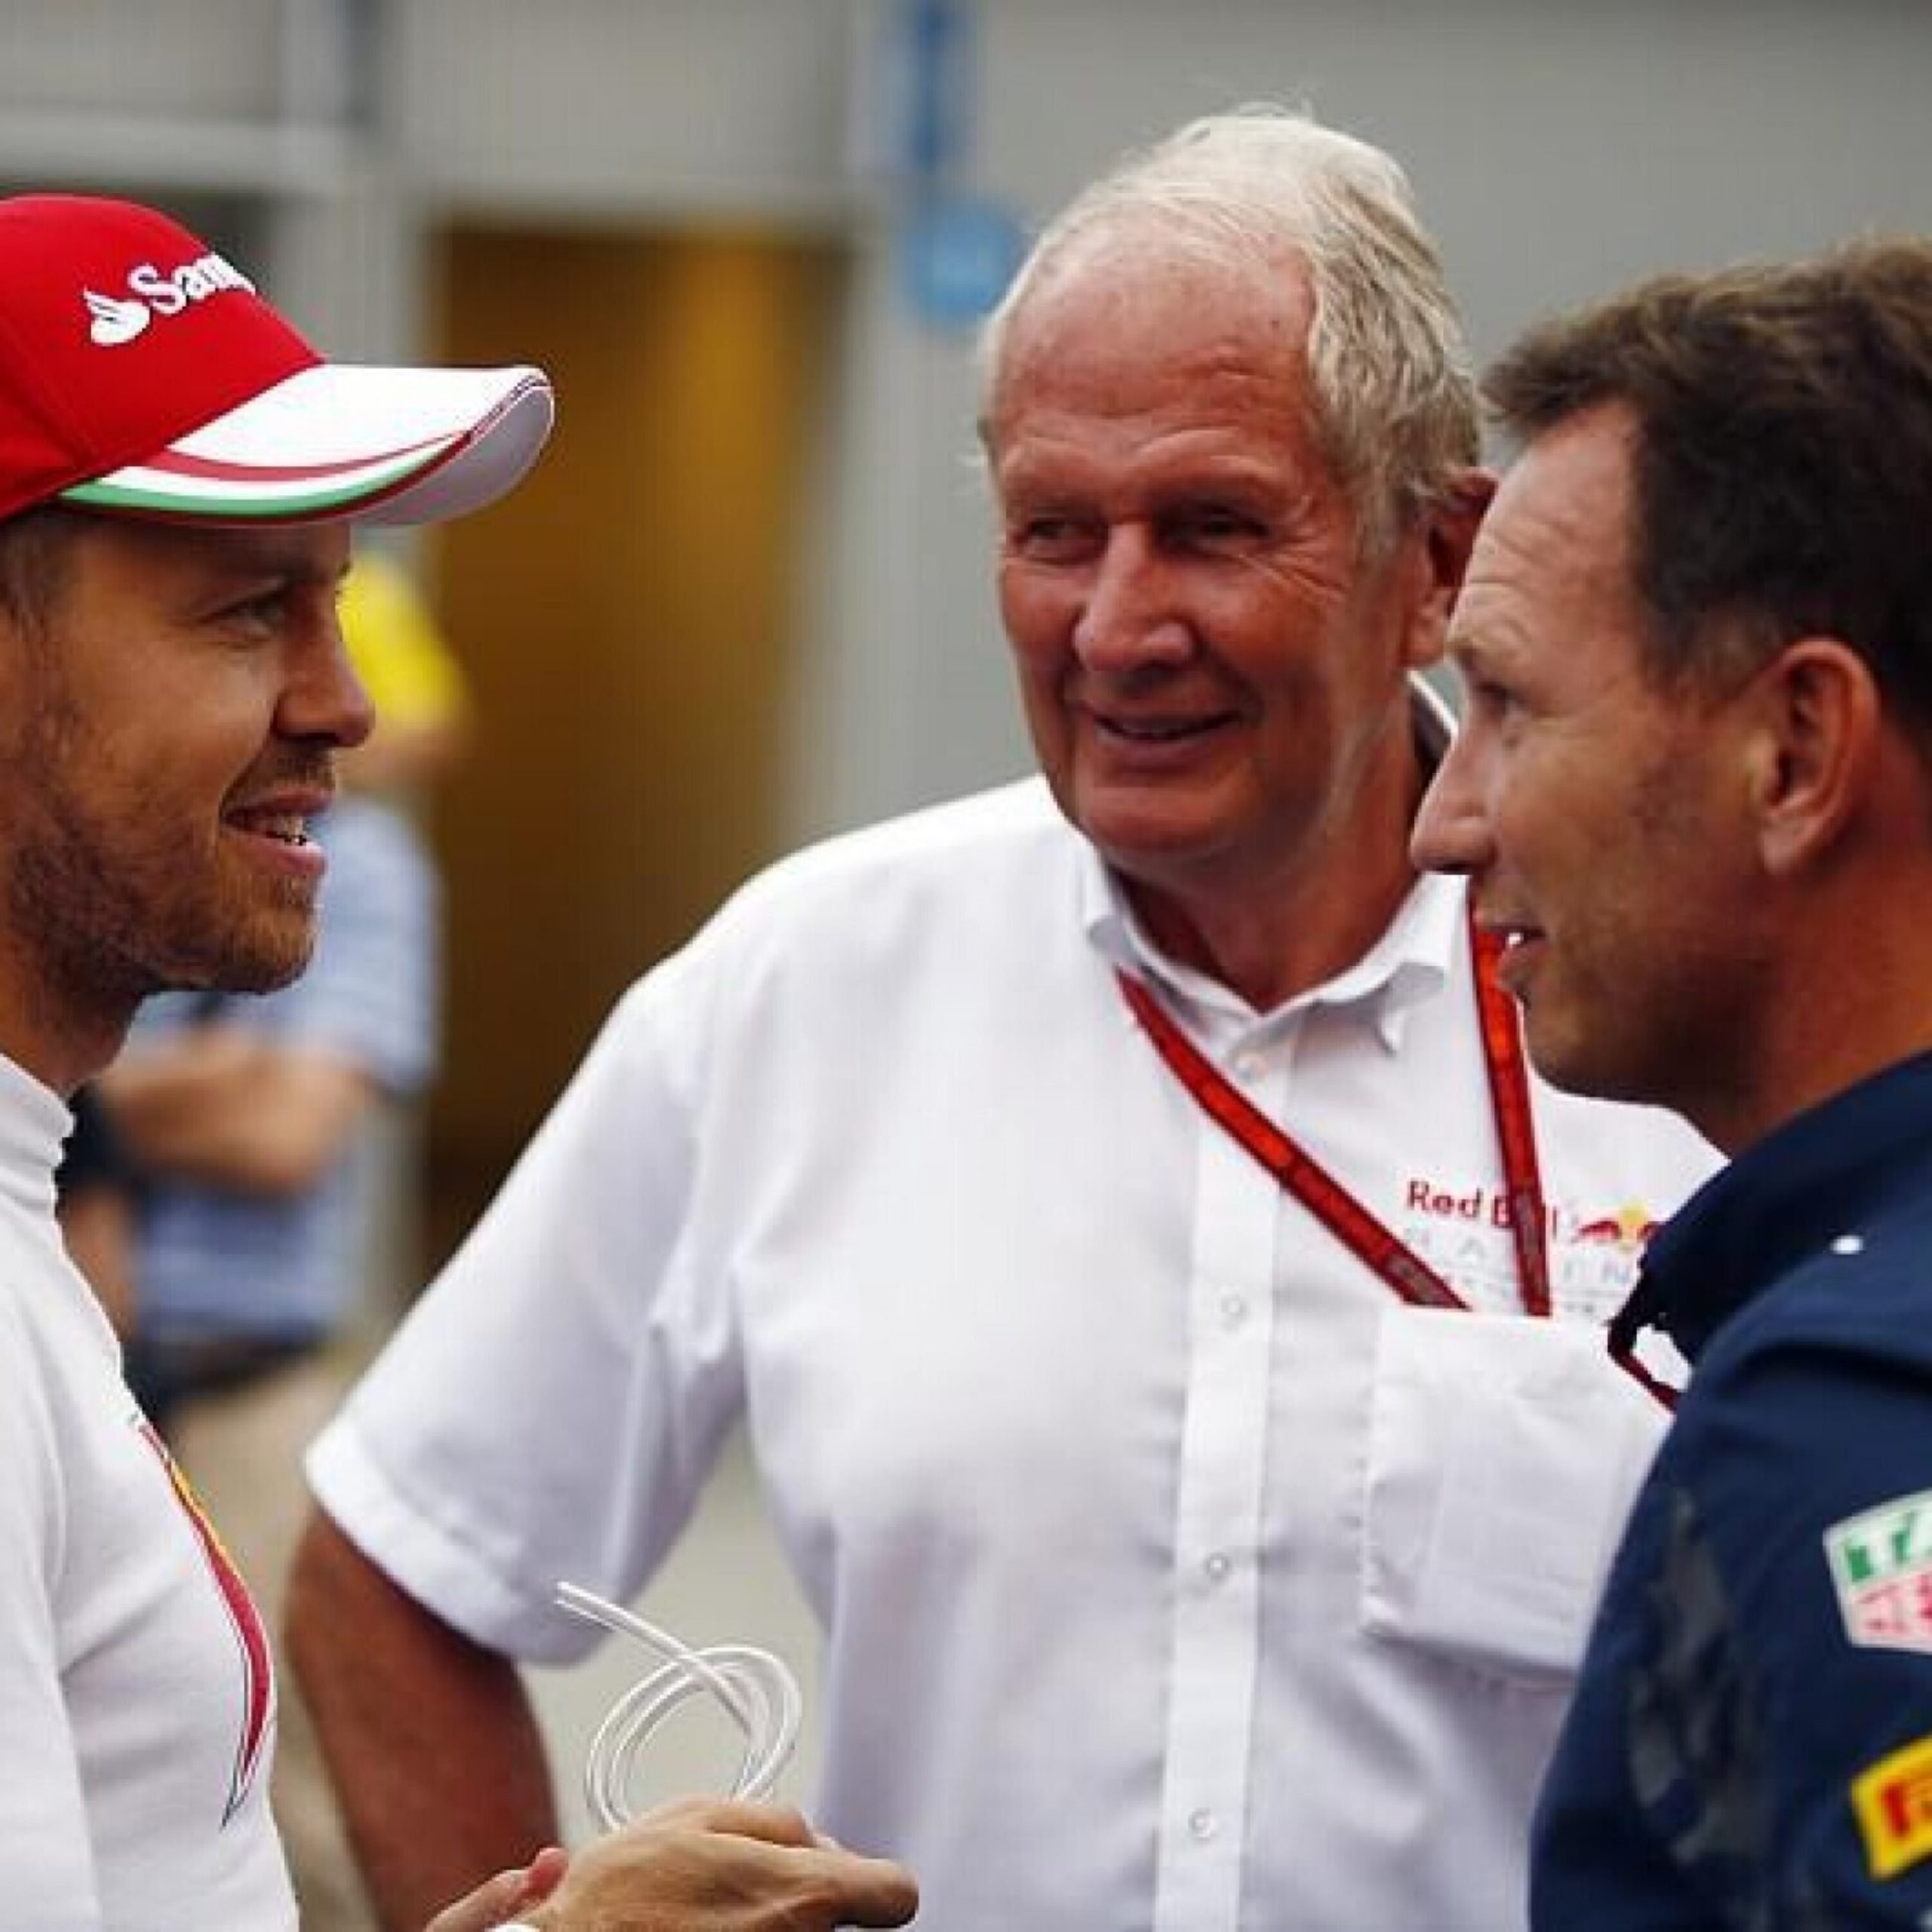 Red Bull Supports Vettel, Where Is Mclaren's Support For Hamilton?